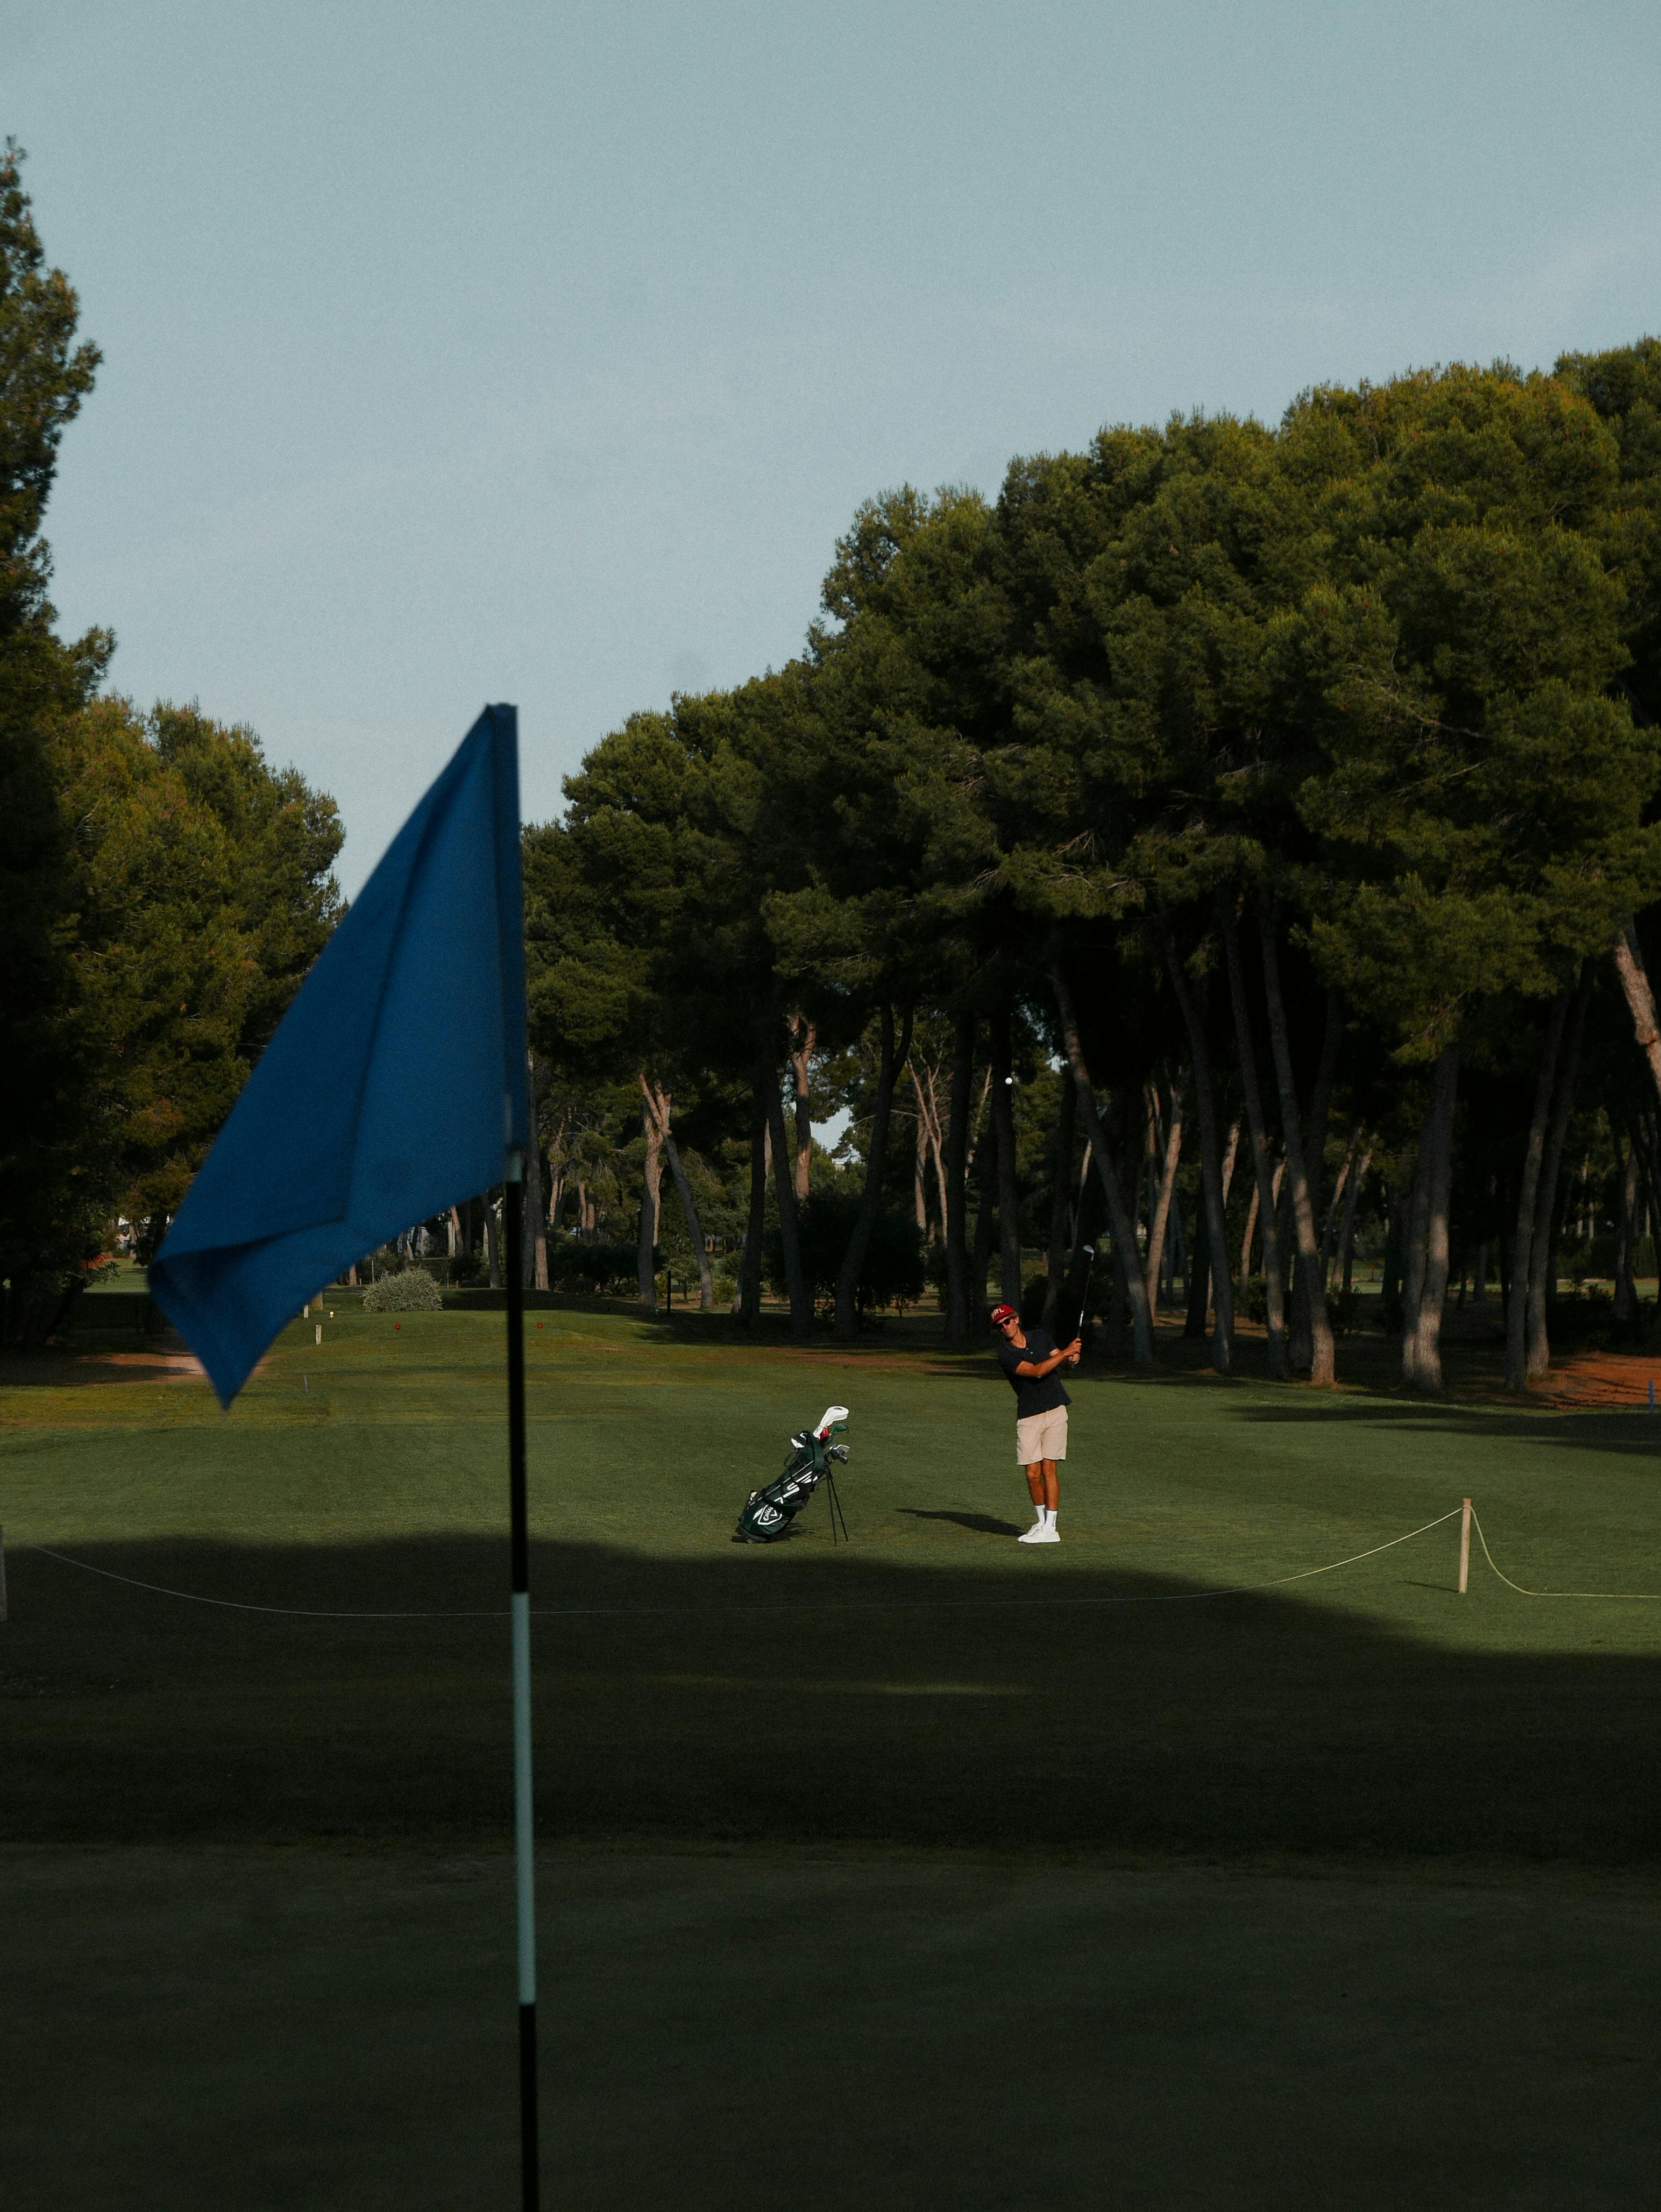 Jorge Abian aproach golf shot